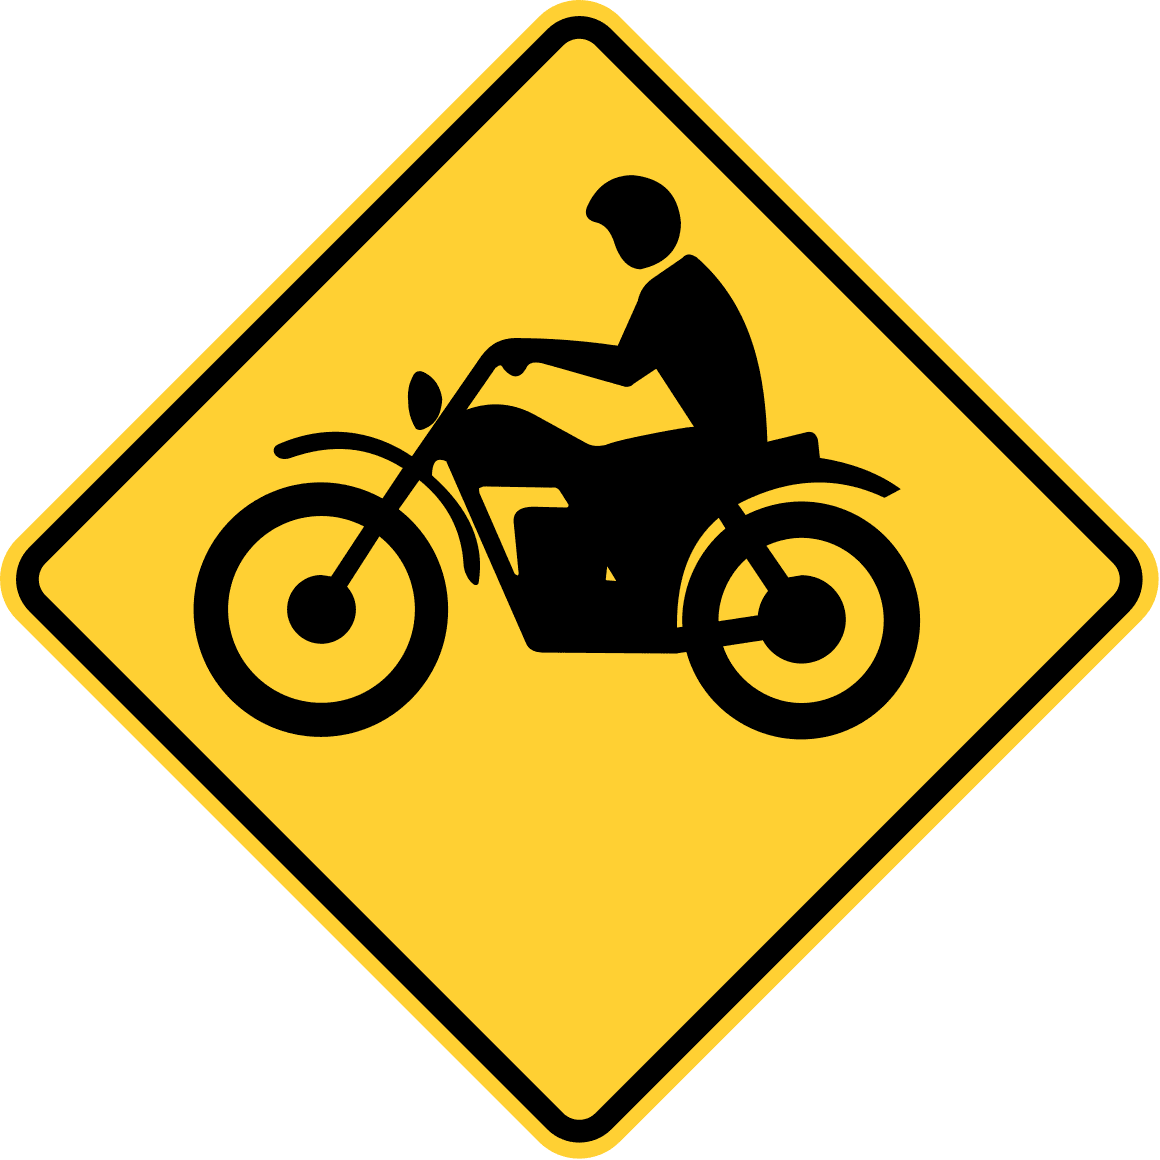 Знак мотоцикл в круге. Дорожный знак мотоцикл. Needing assistance sign Motorcycle. Знак мотоцикл в Красном круге. Дорожные знаки охота.